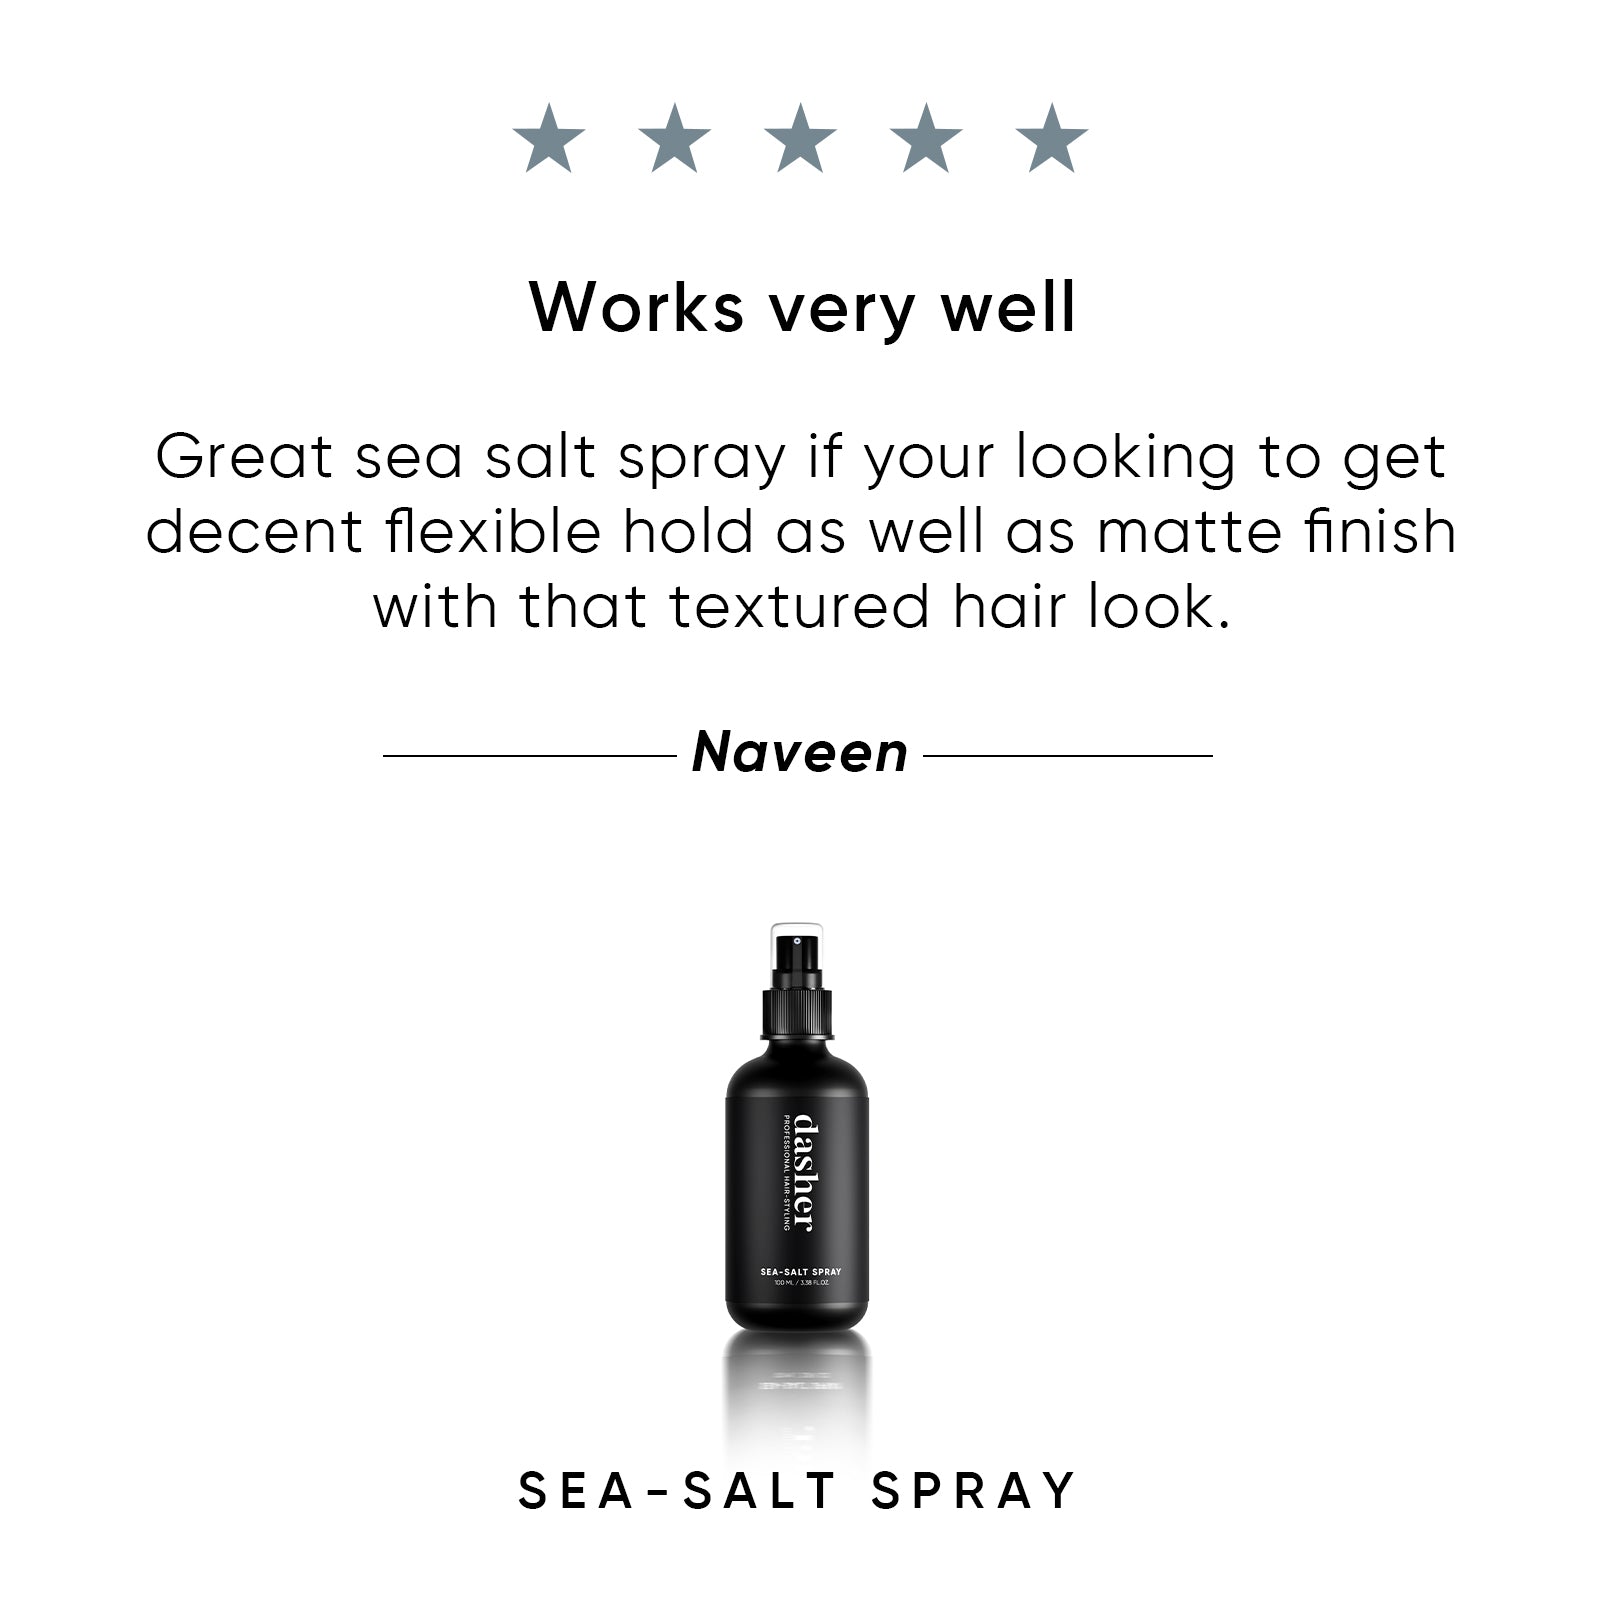 dasher sea salt spray customer review 